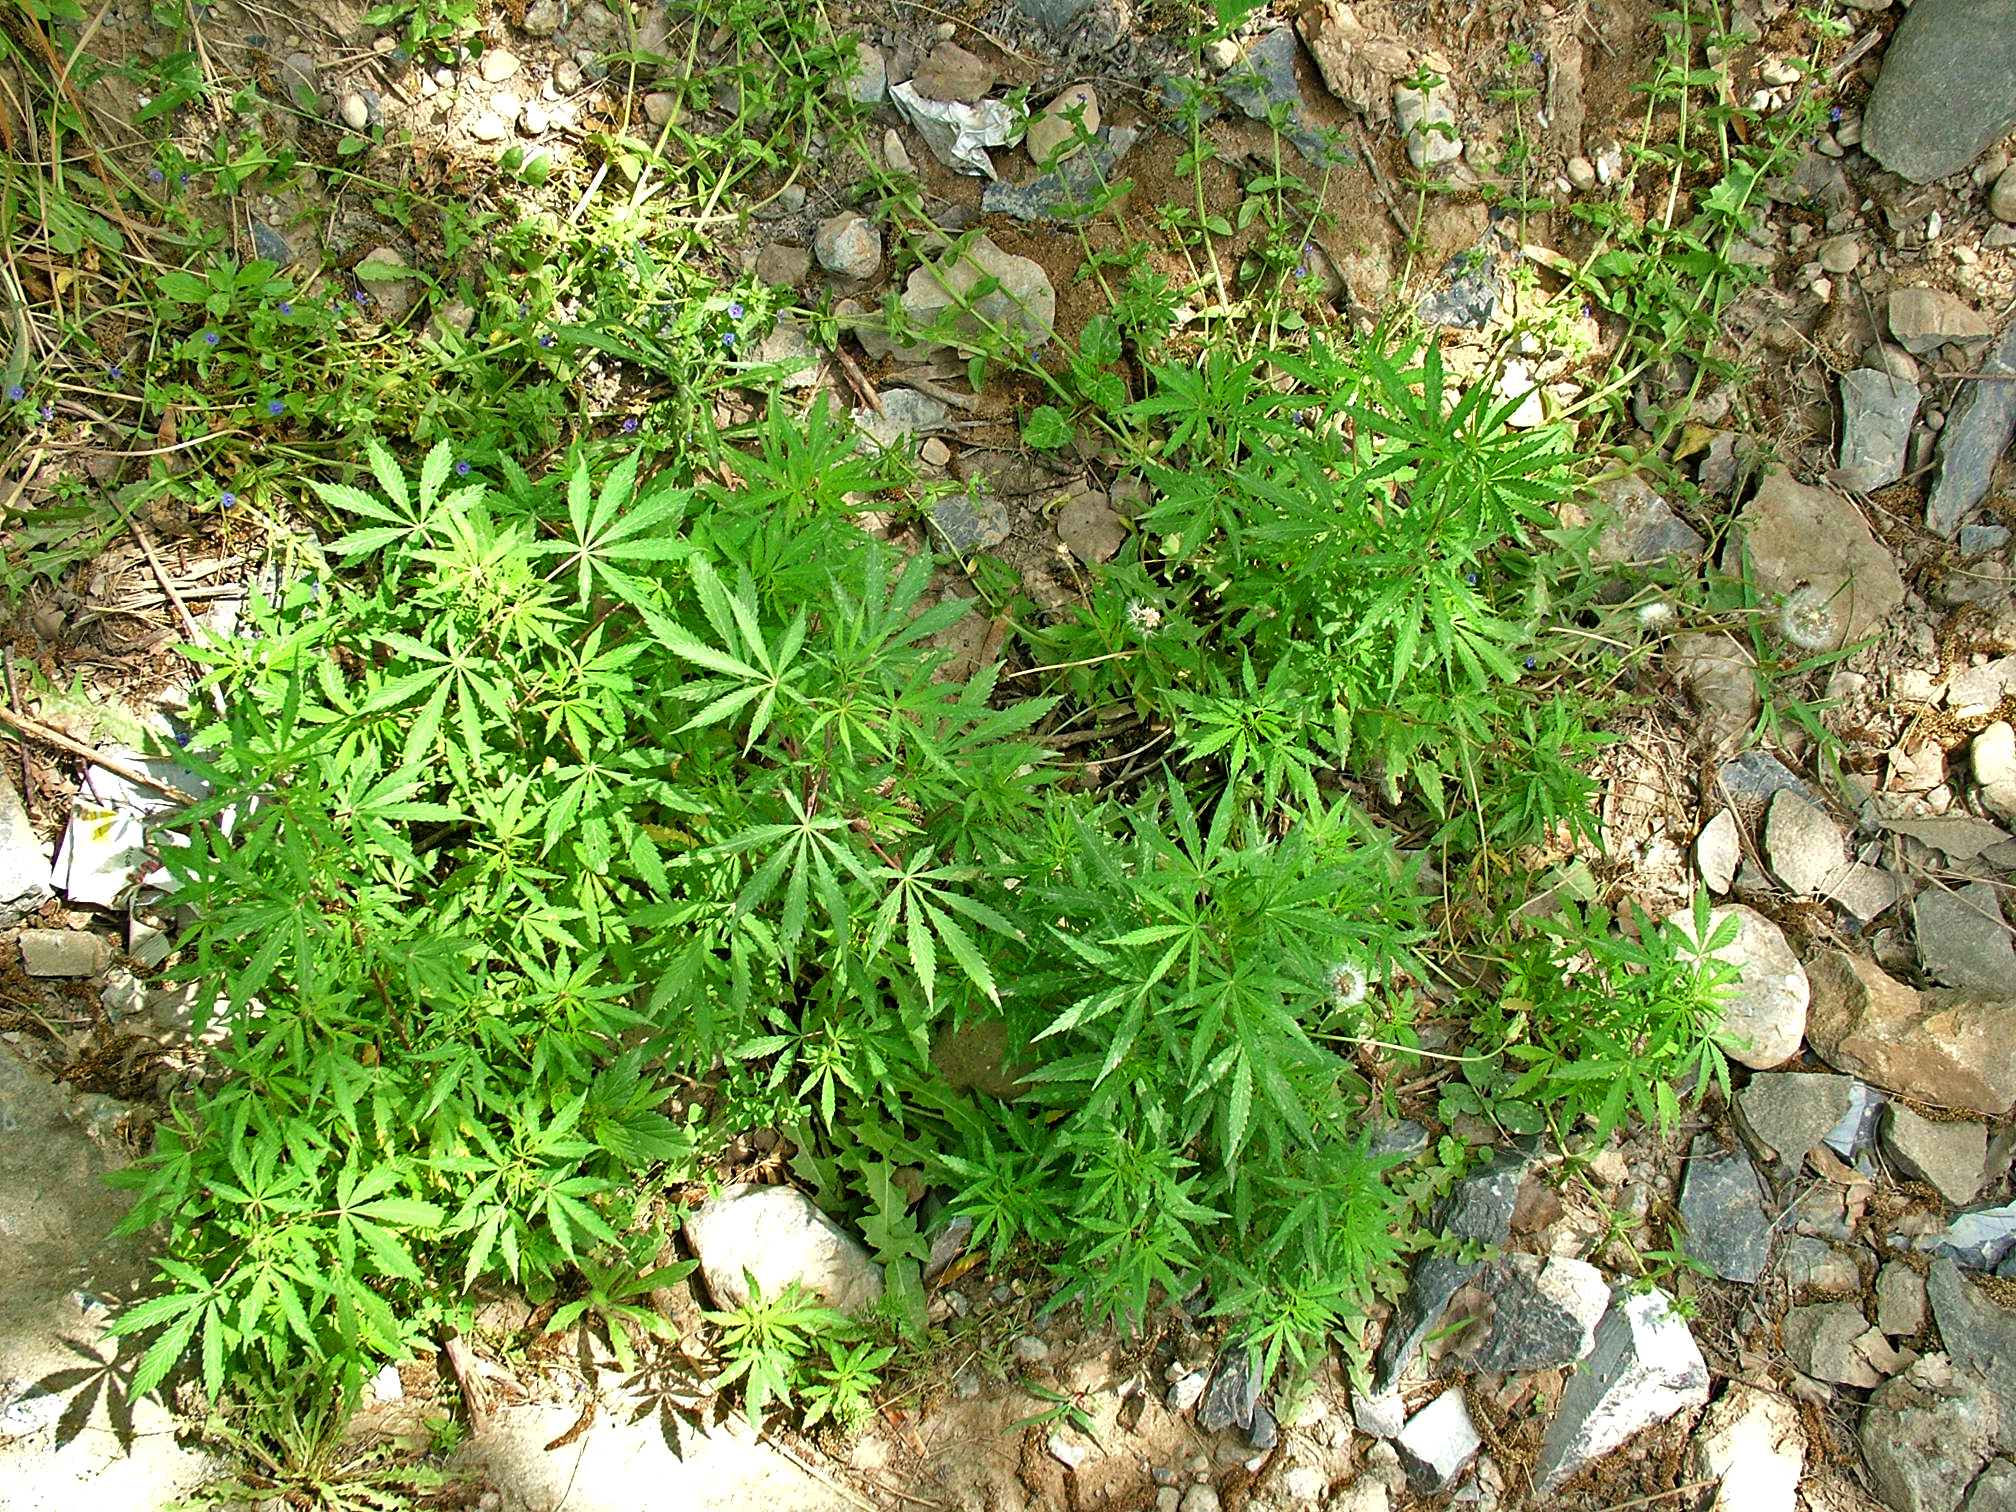 File:Marijuana growing Islamabad 01.jpg - Wikimedia Commons